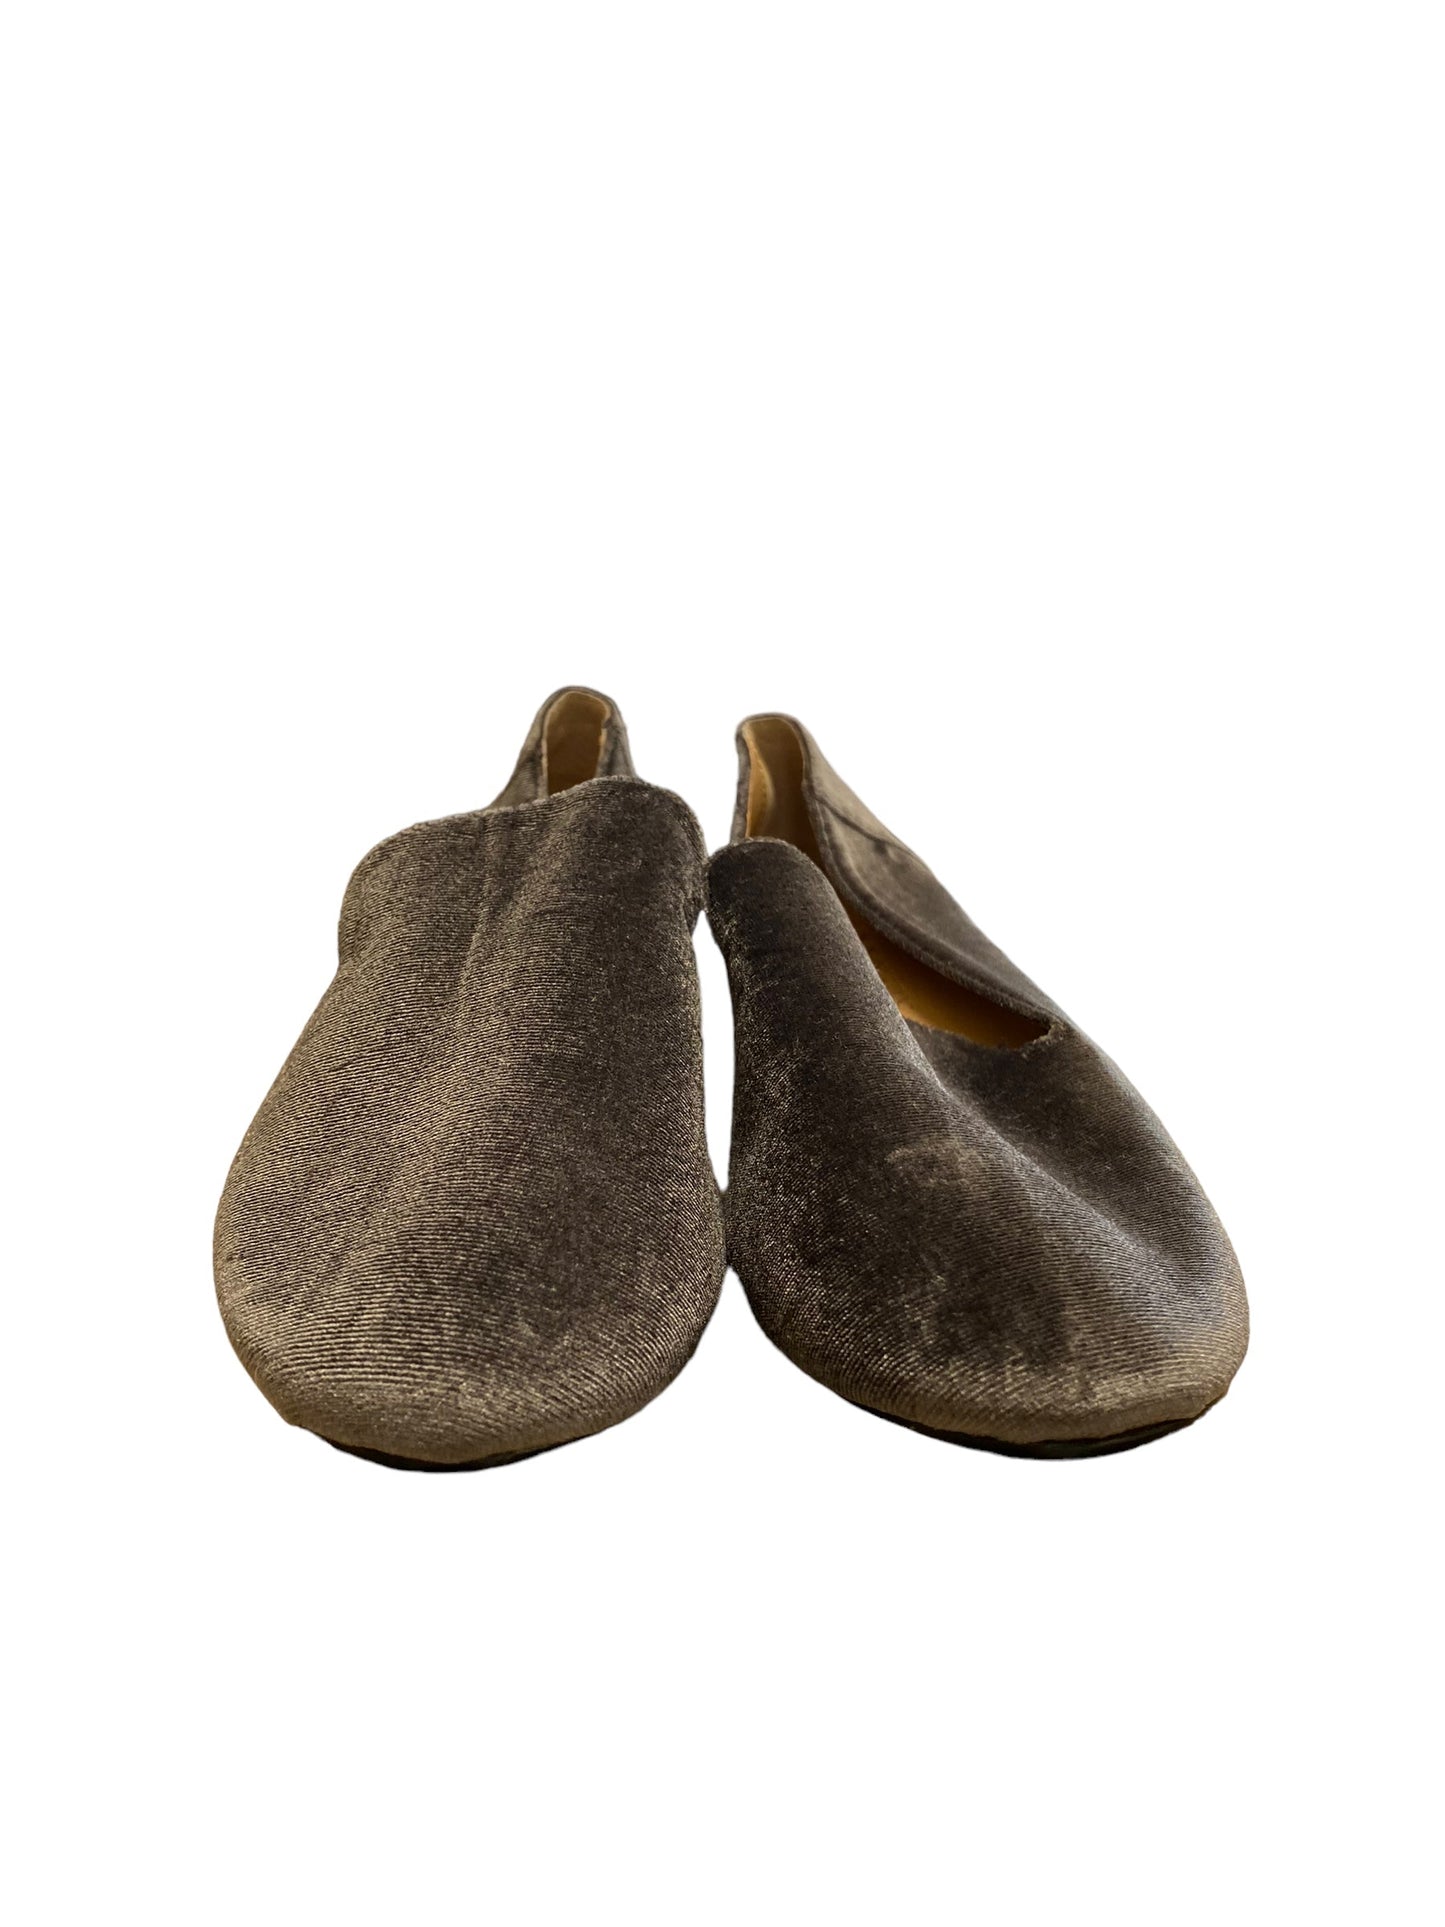 Shoes Flats Ballet By Banana Republic  Size: 6.5